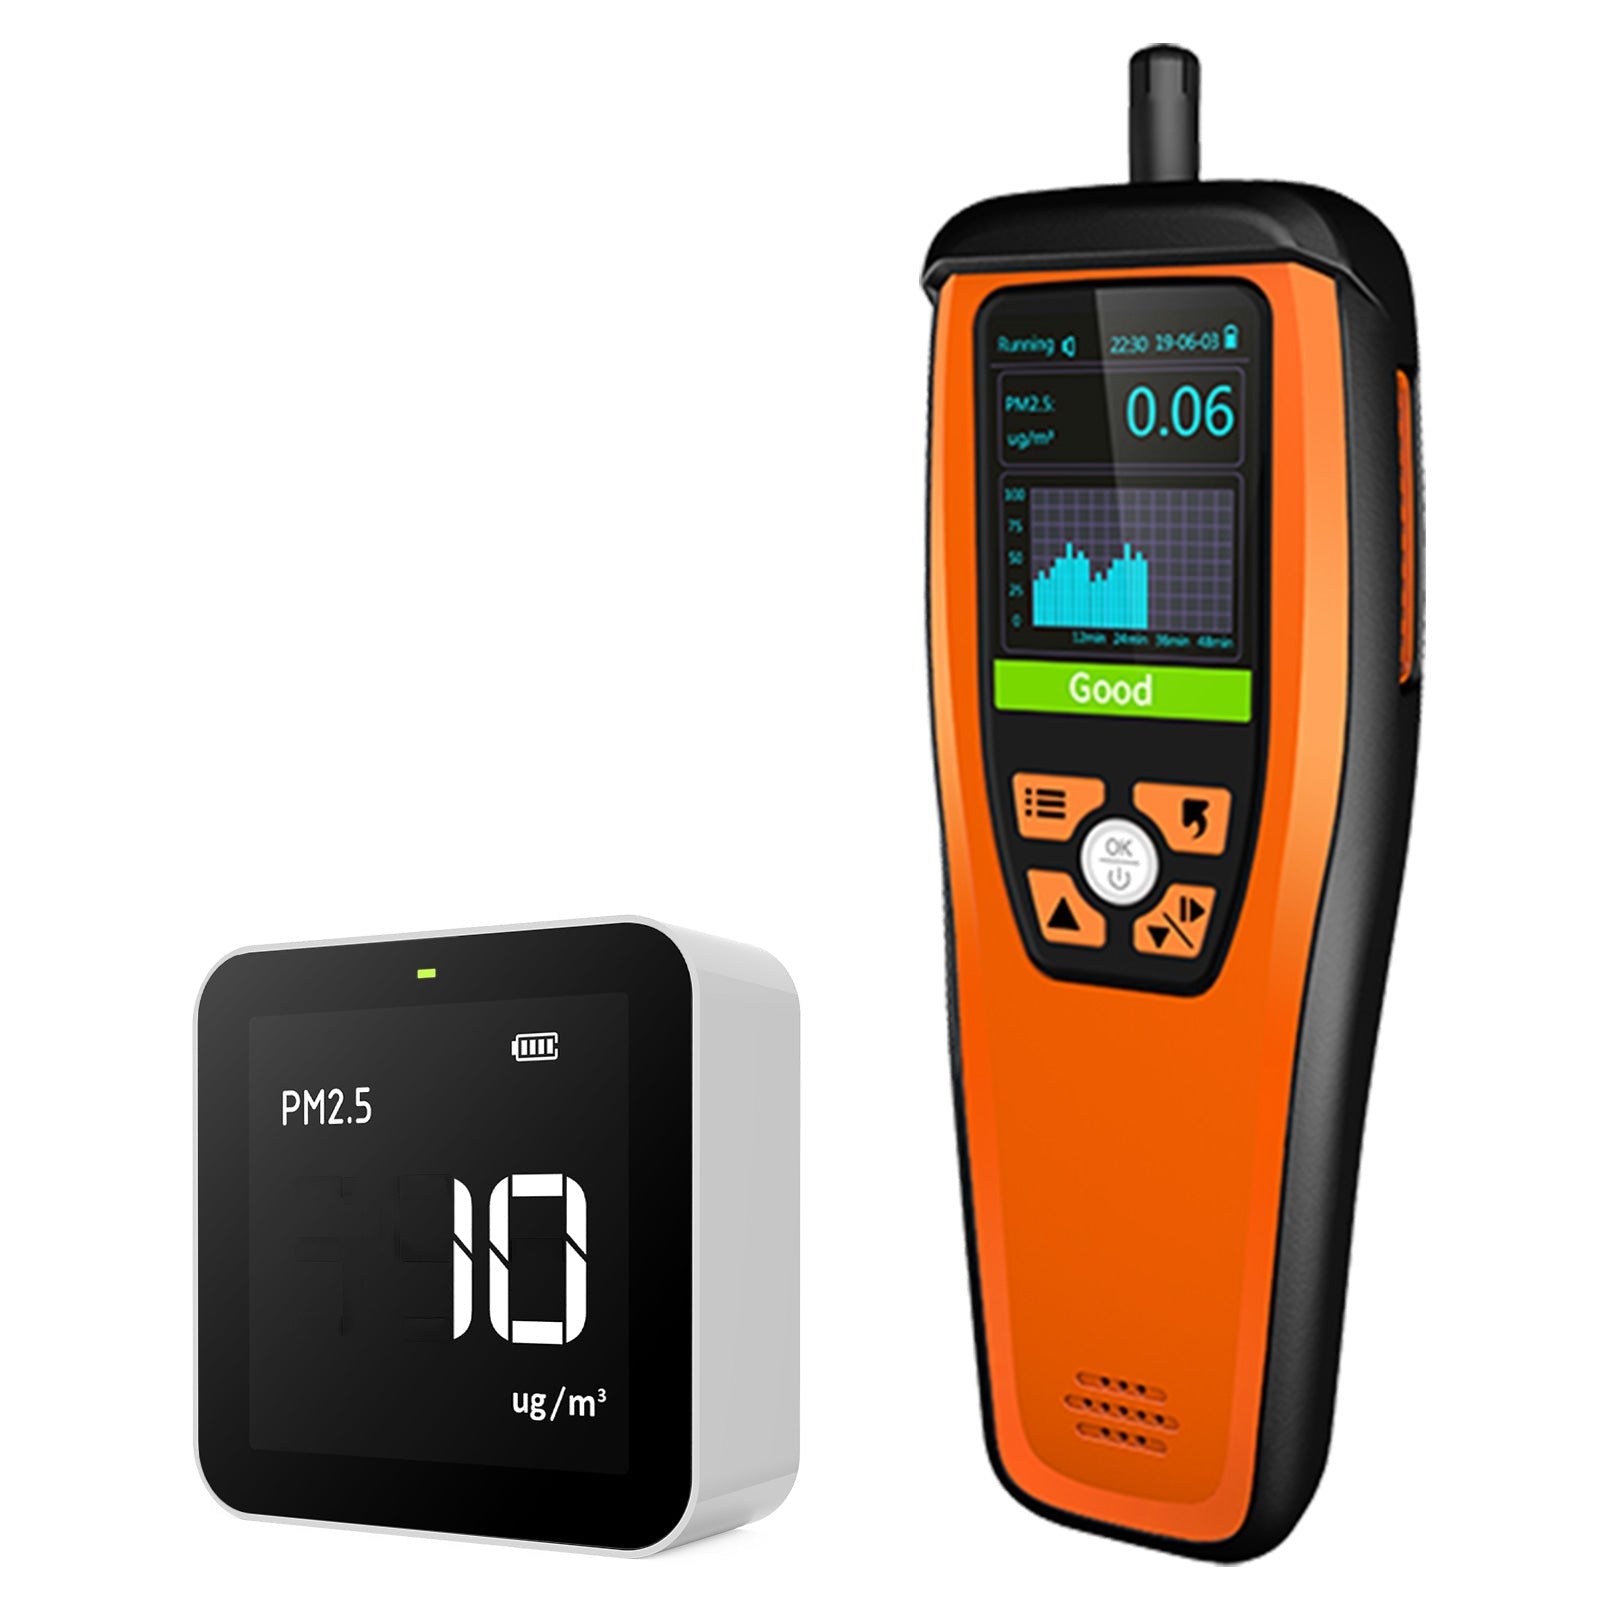 Temtop M2000 CO2 Air Quality Monitor Easy Calibration Audio Alarm - Elitech Technology, Inc.